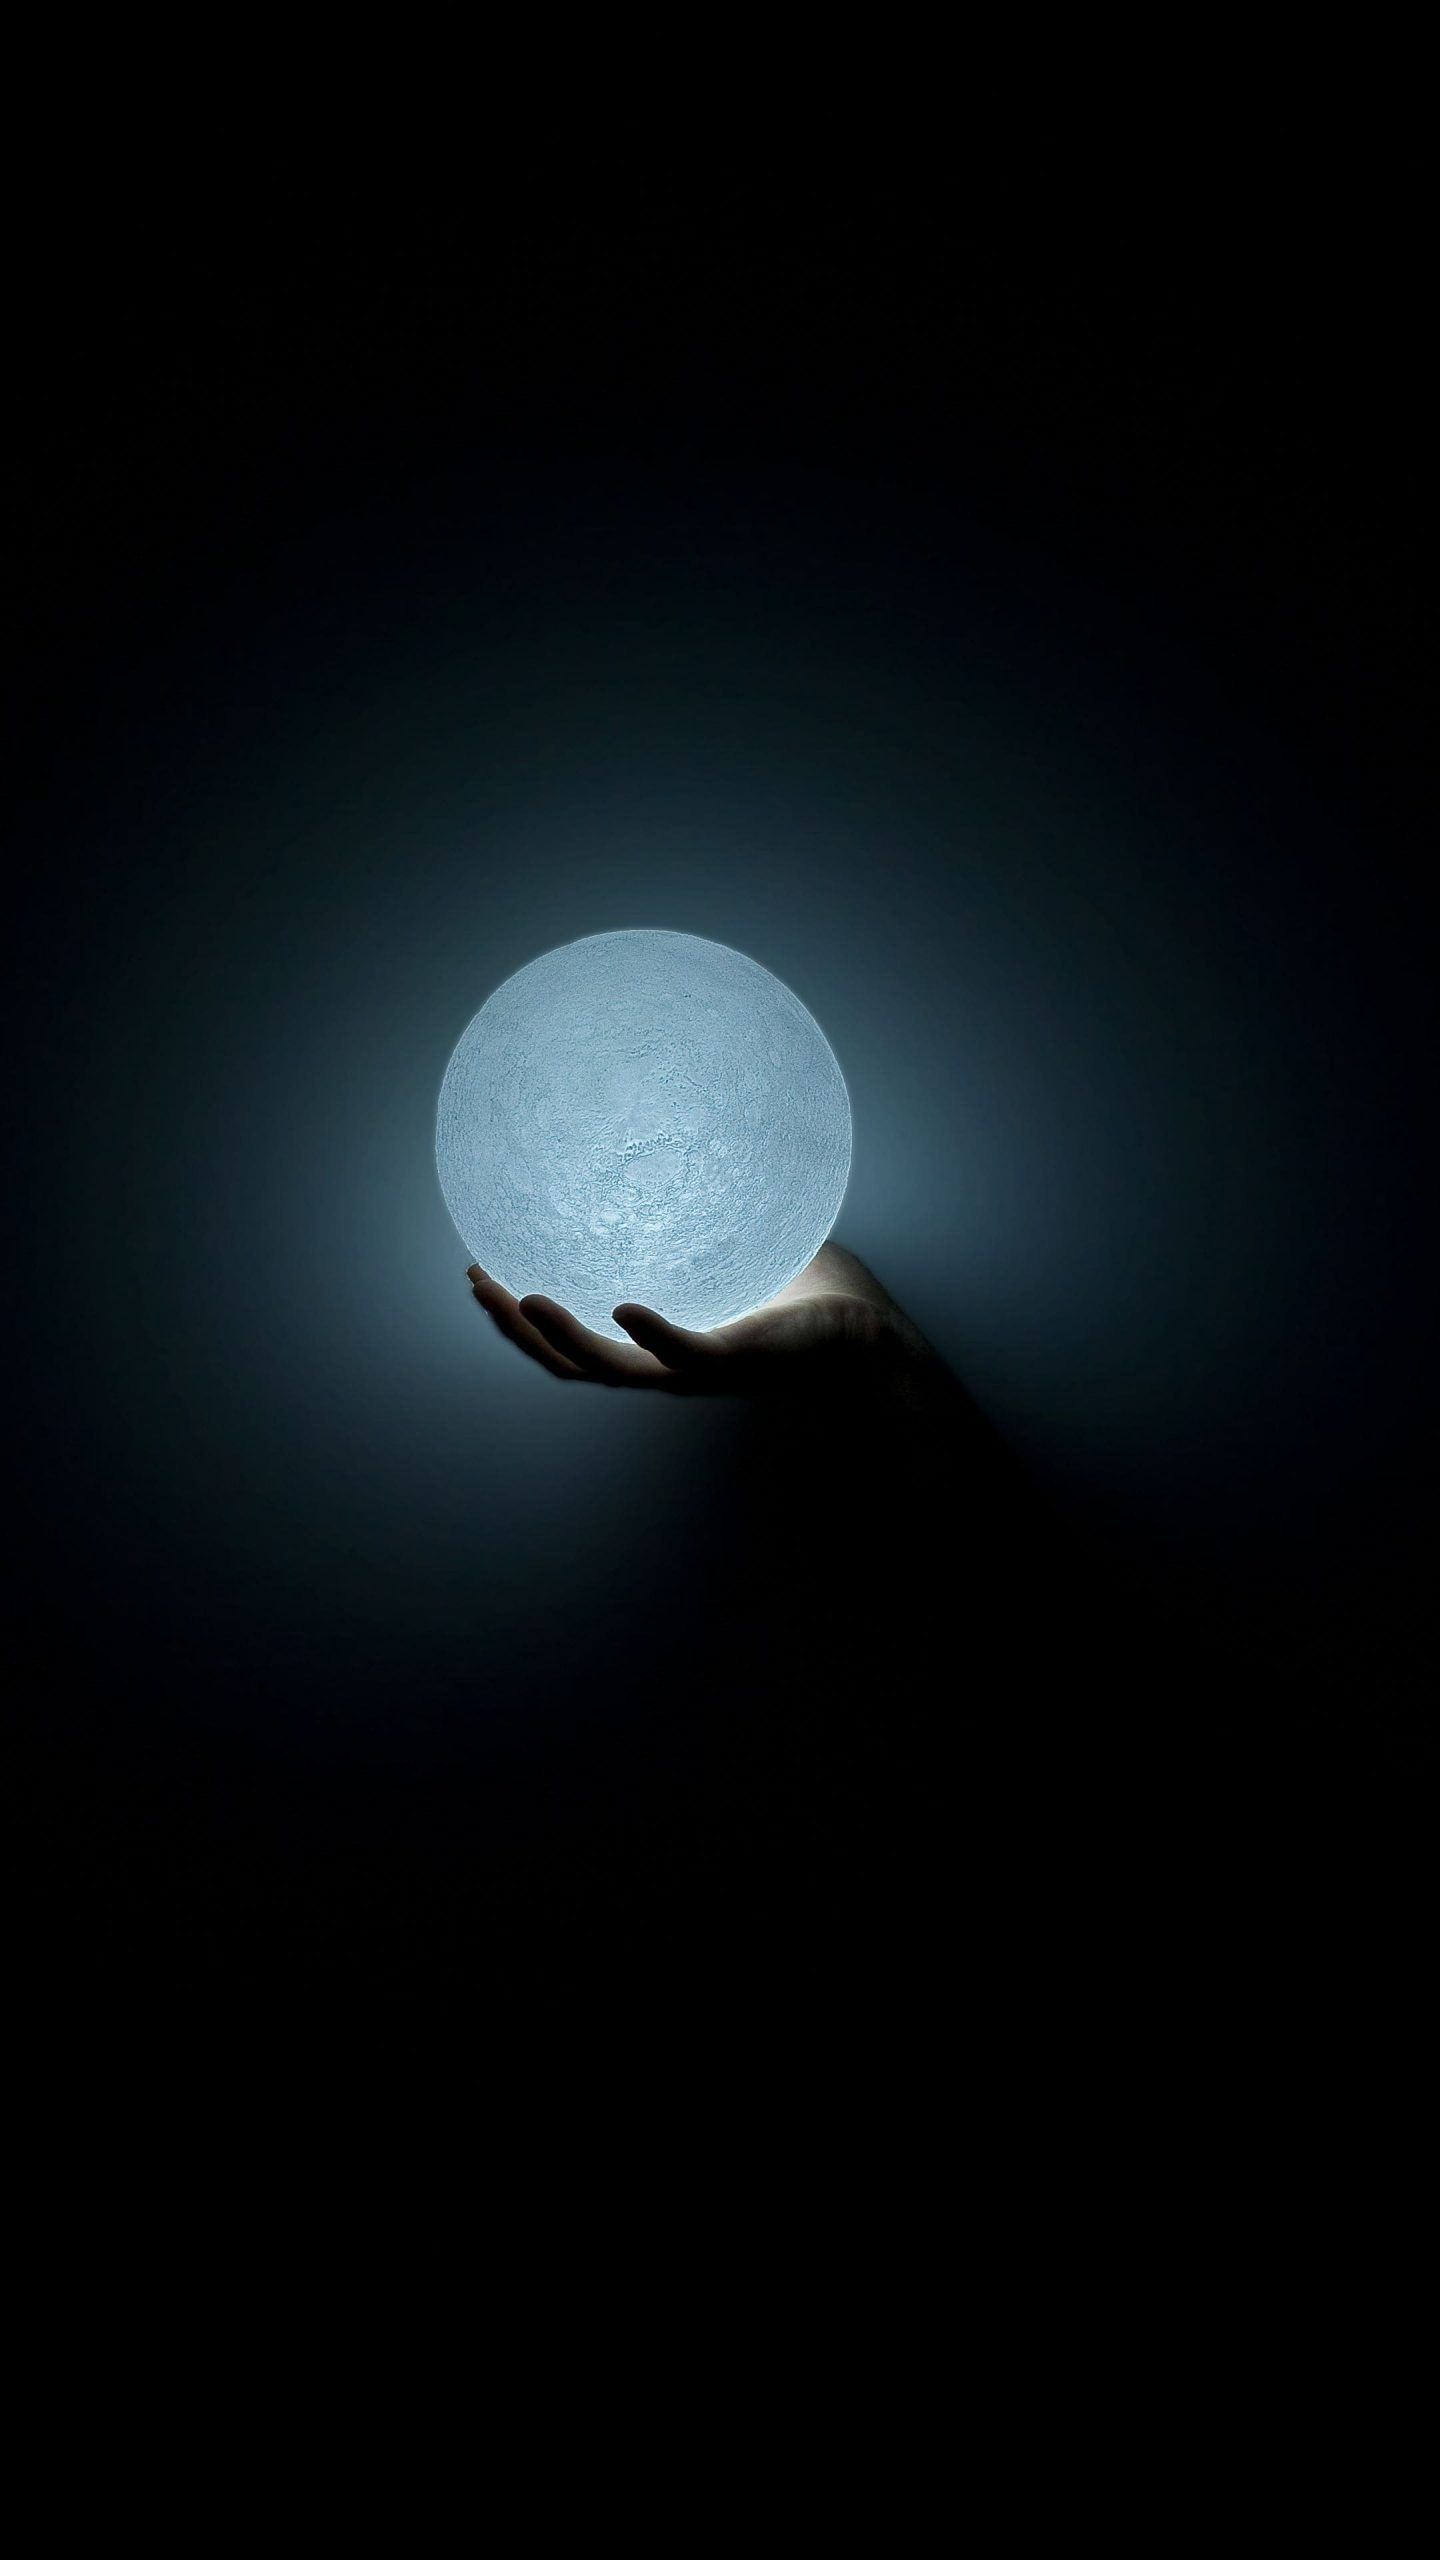 A hand holding up an illuminated ball - HD